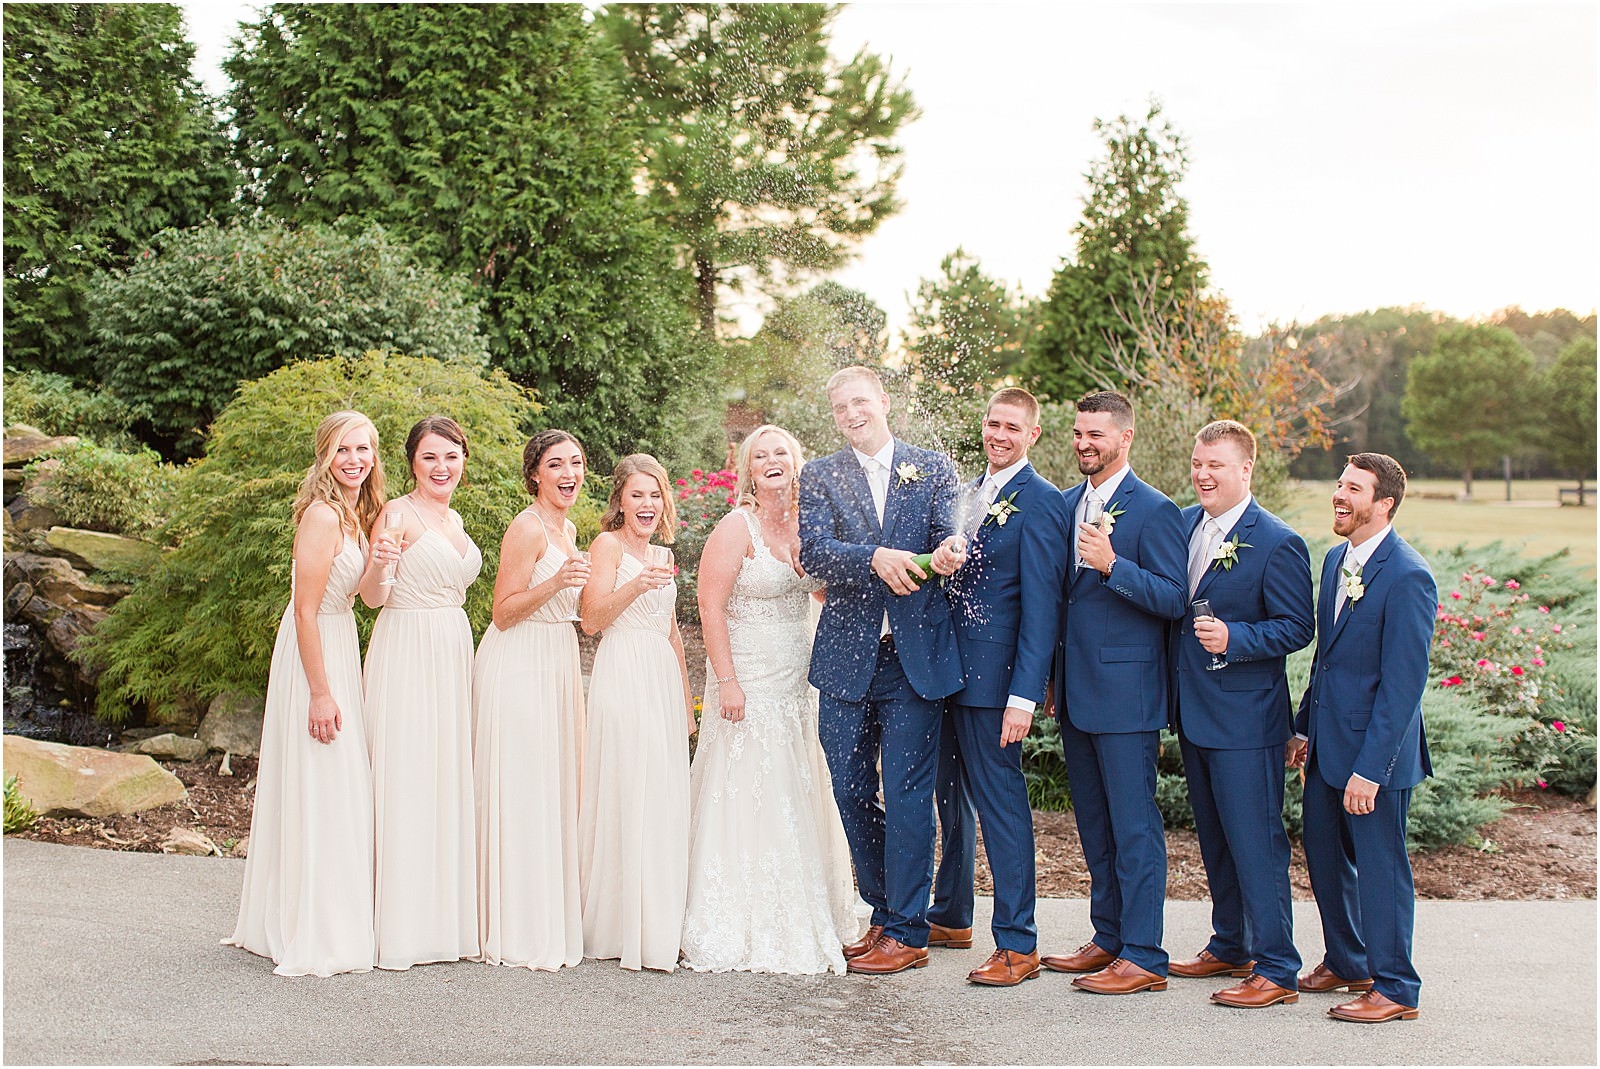 Kelsey and Caleb | Walkers Bluff Winery Wedding | Bret and Brandie Photography086.jpg